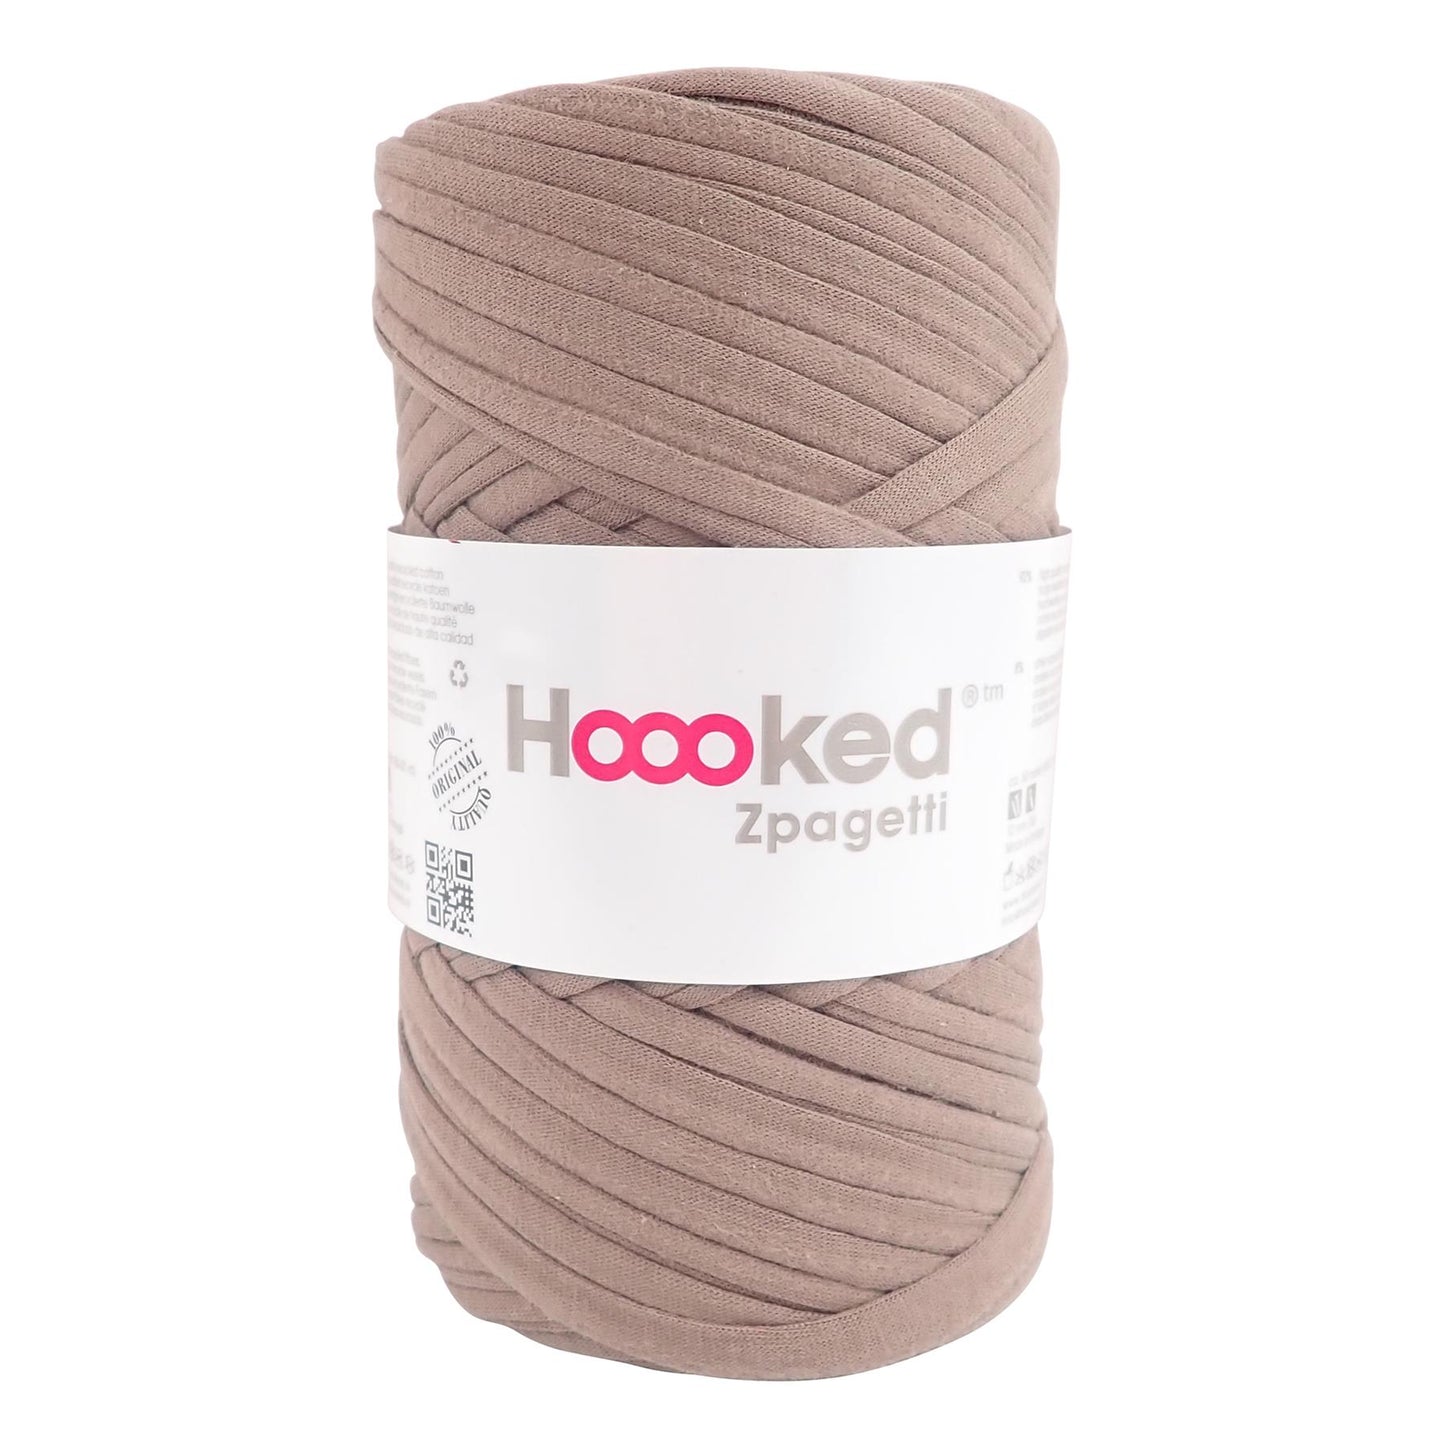 Hoooked Zpagetti Brown Cotton T-Shirt Yarn - 60M 350g